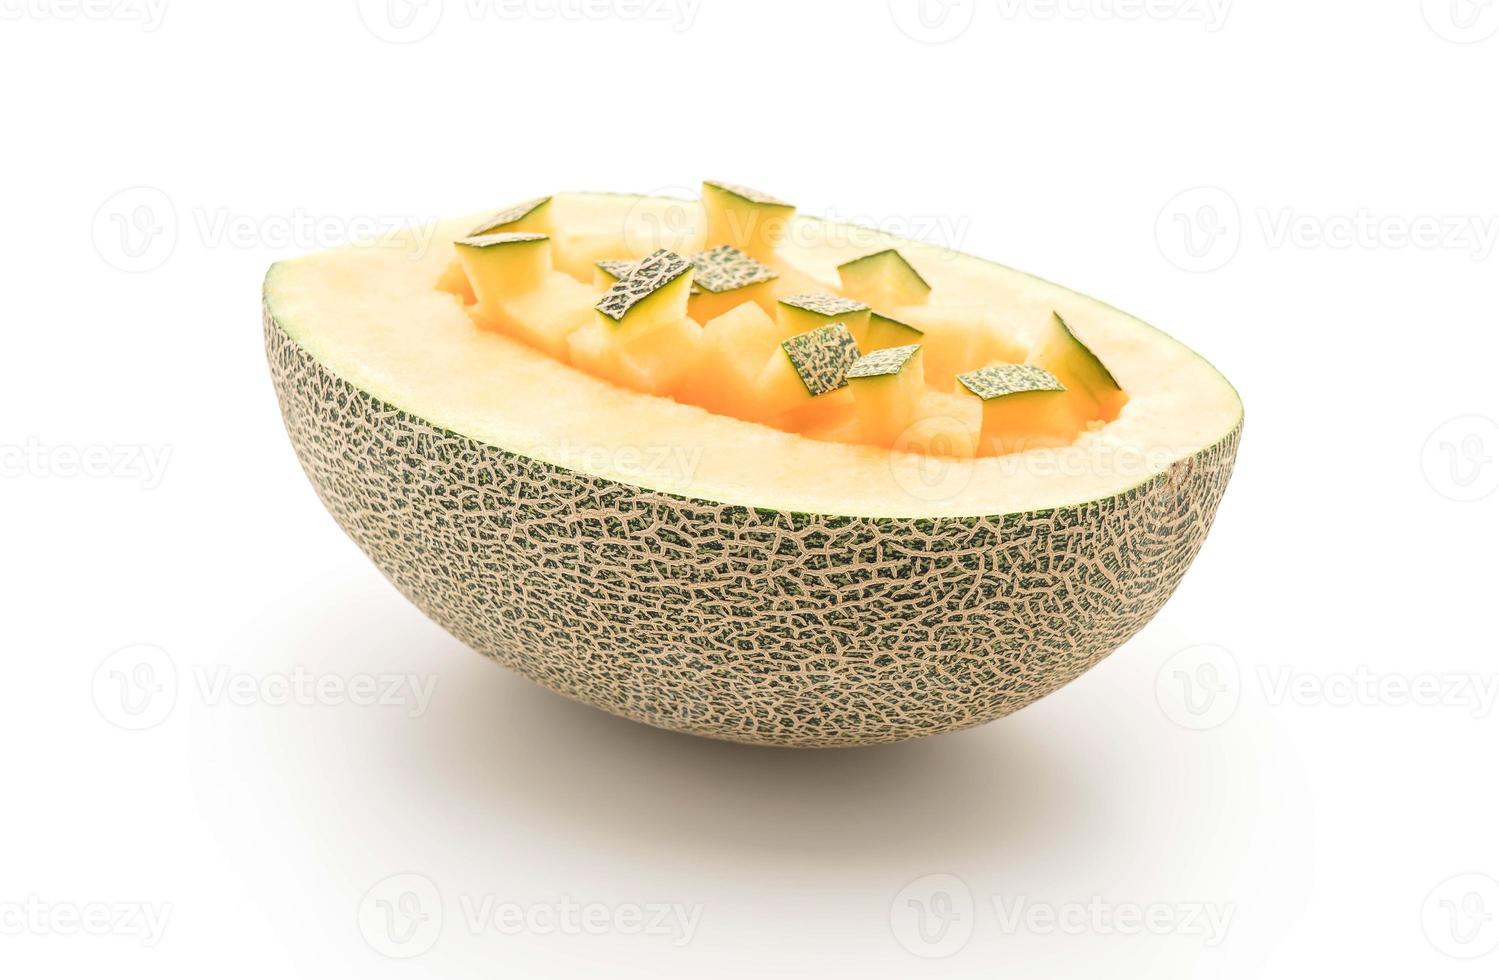 Melon cantaloup sur fond blanc photo